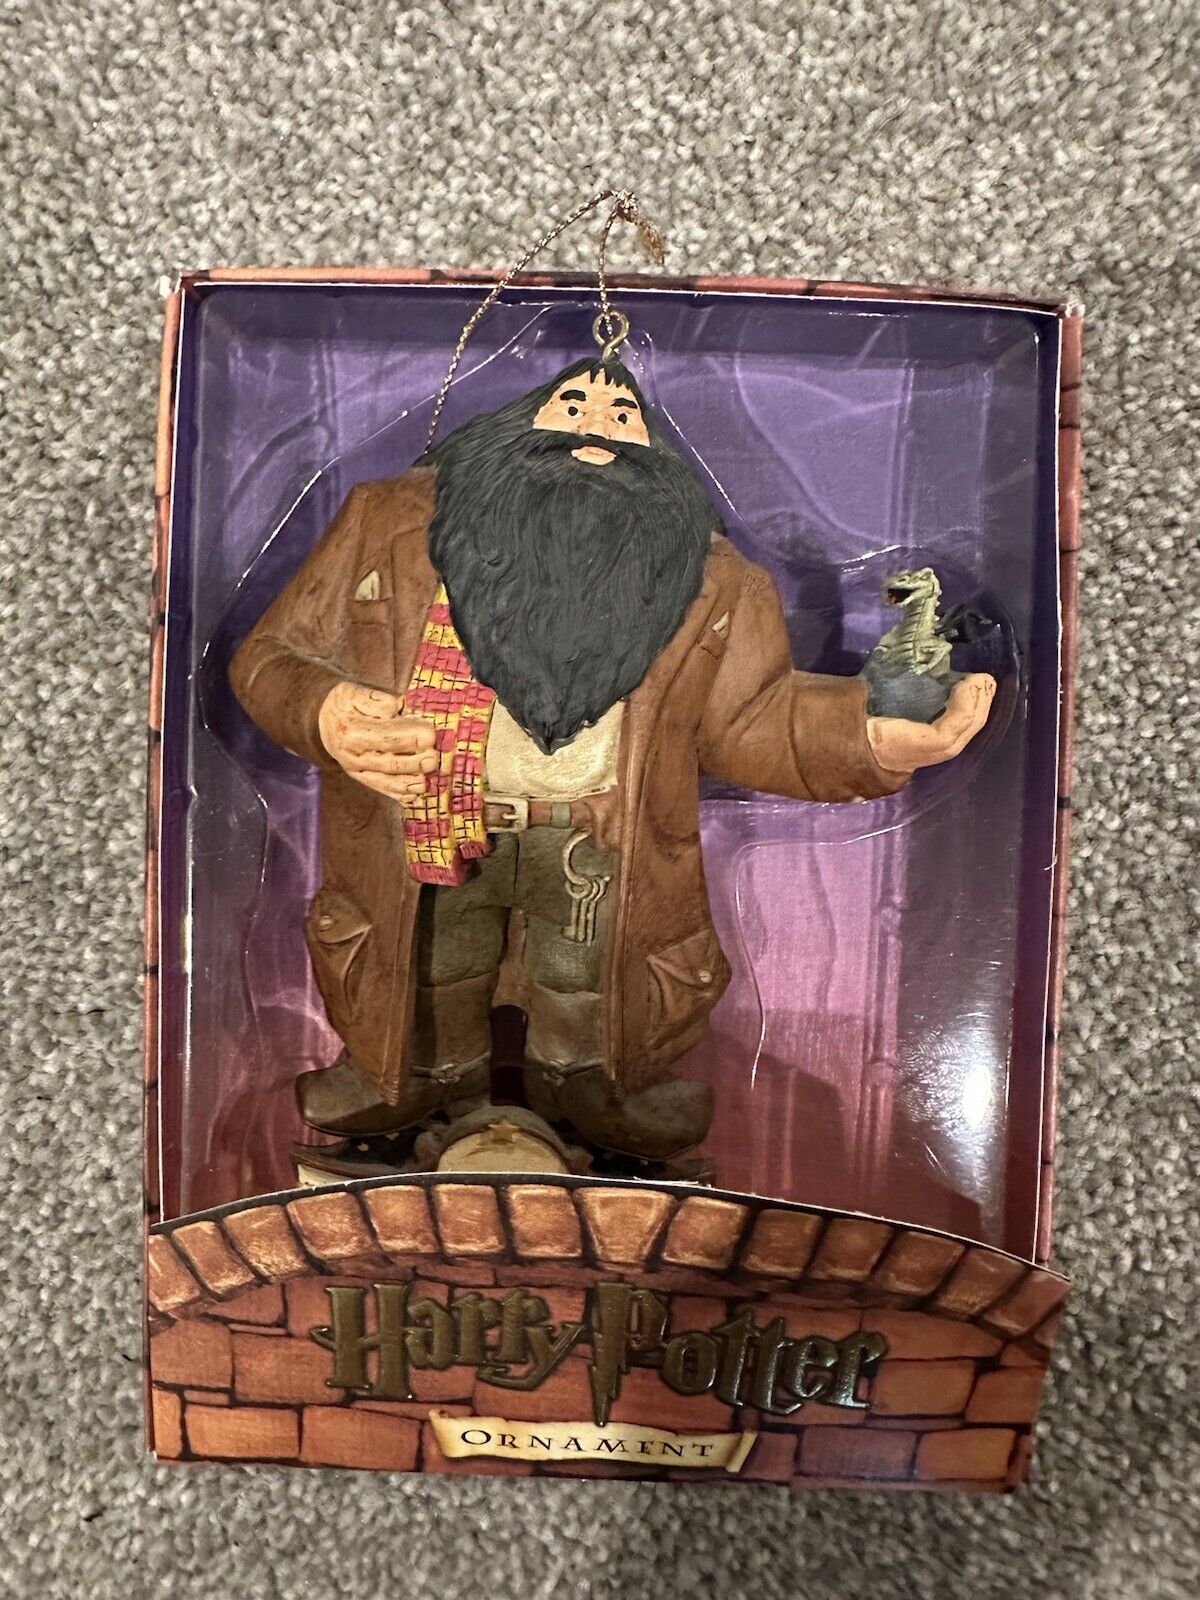 2001 Warner Bros. Kurt S. Adler Harry Potter’s Rubeus Hagrid Ornament